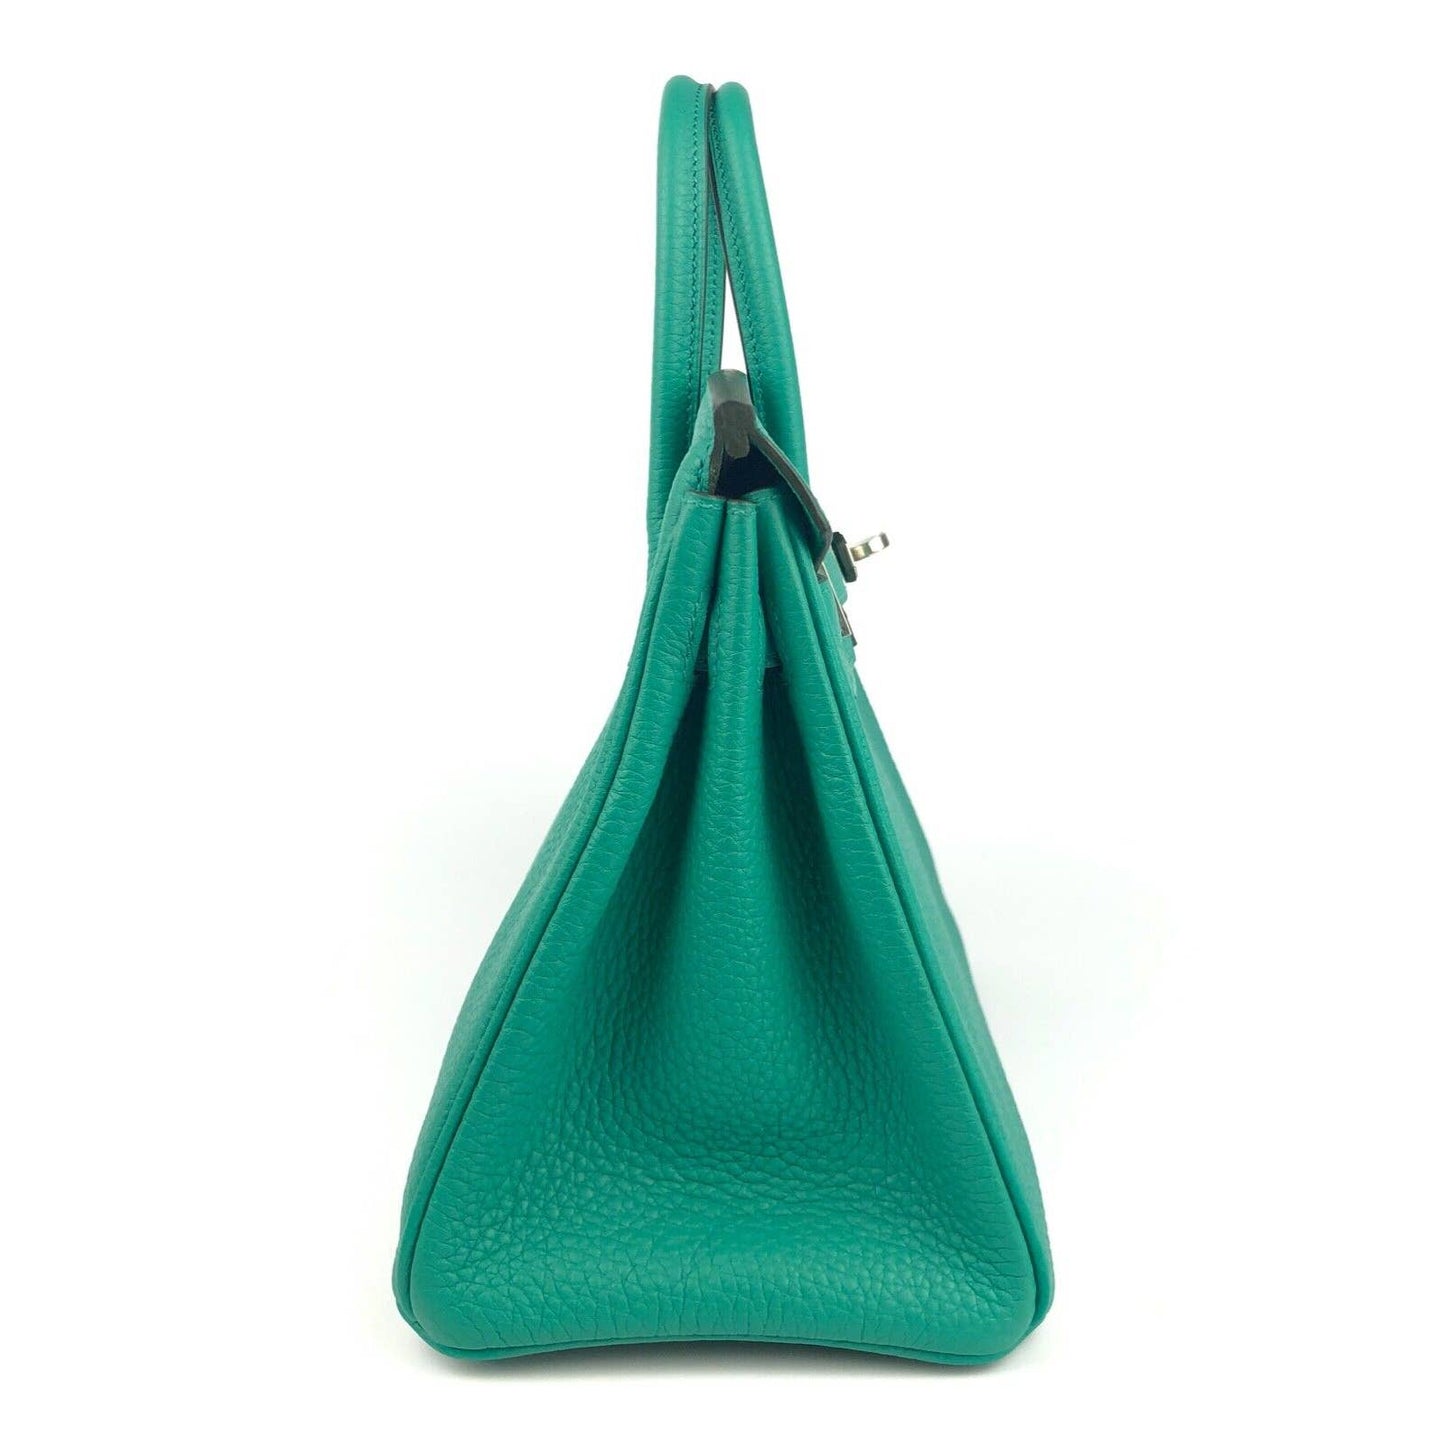 Hermes Birkin 25 Vert Verone Green Leather Palladium Hardware Handbag Bag